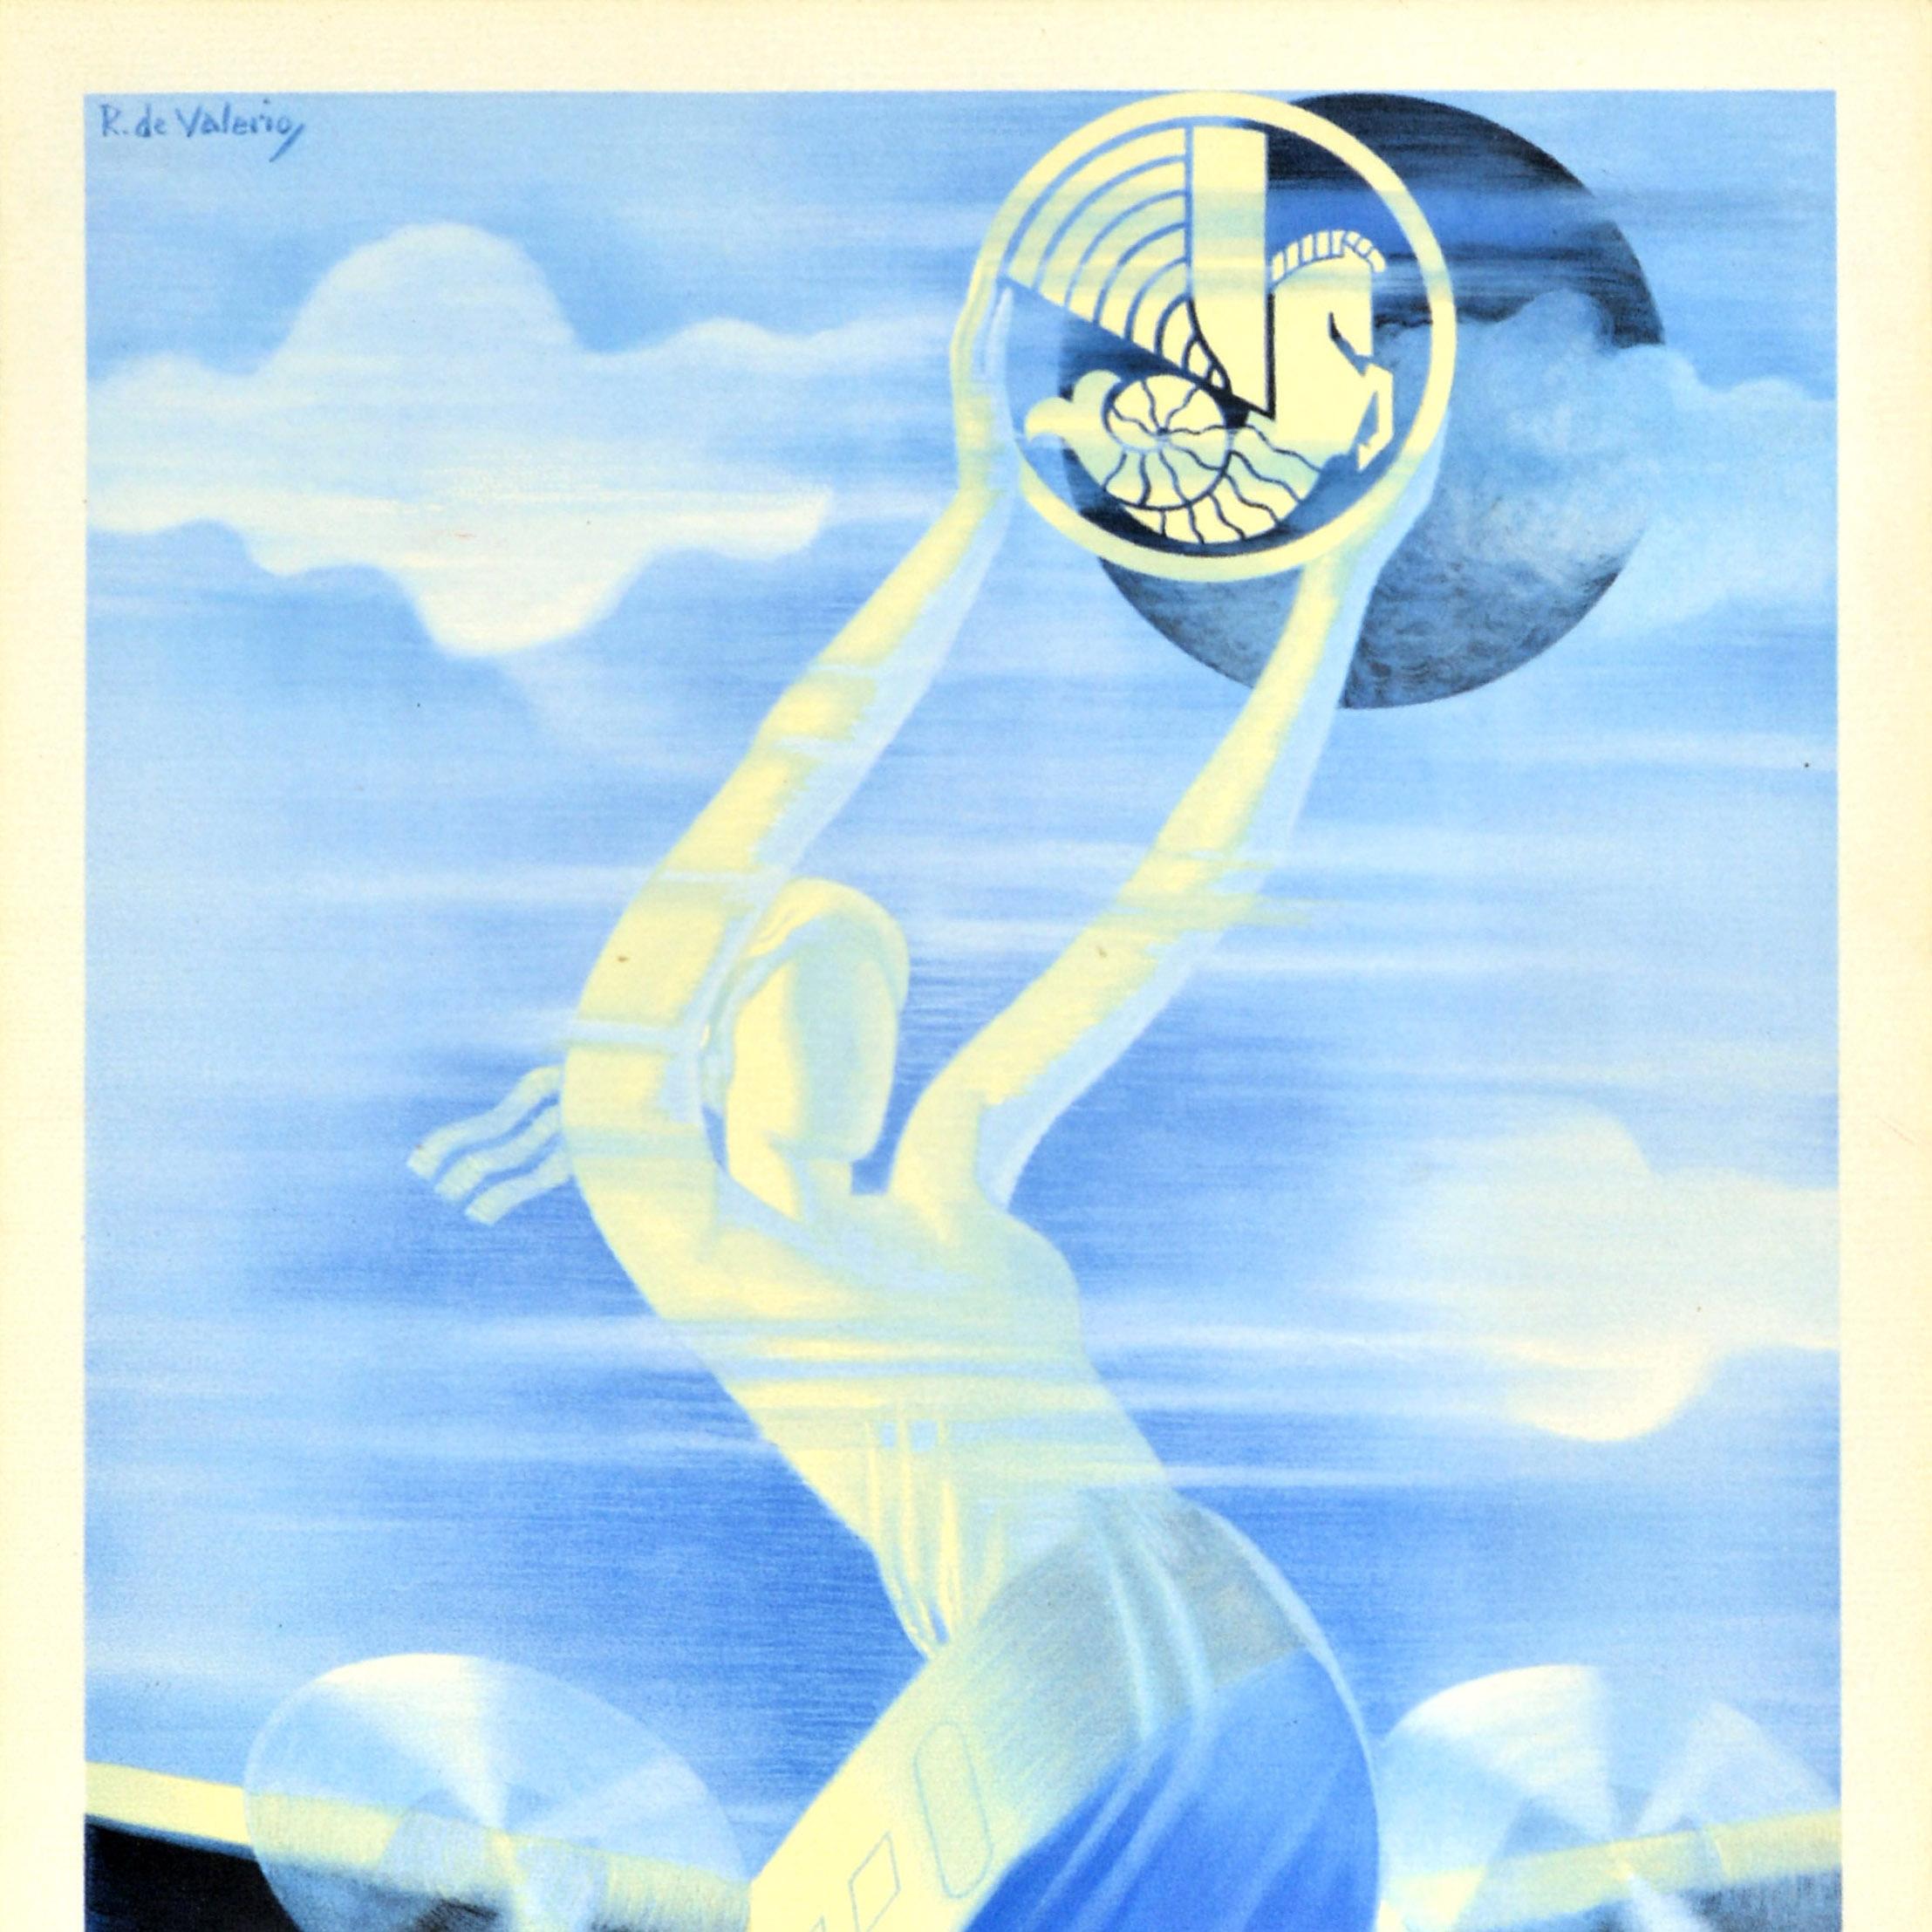 Original Vintage-Reiseplakat Air France Airways, „In All Skies“, Roger De Valerio, Roger De Valerio (Art déco) im Angebot